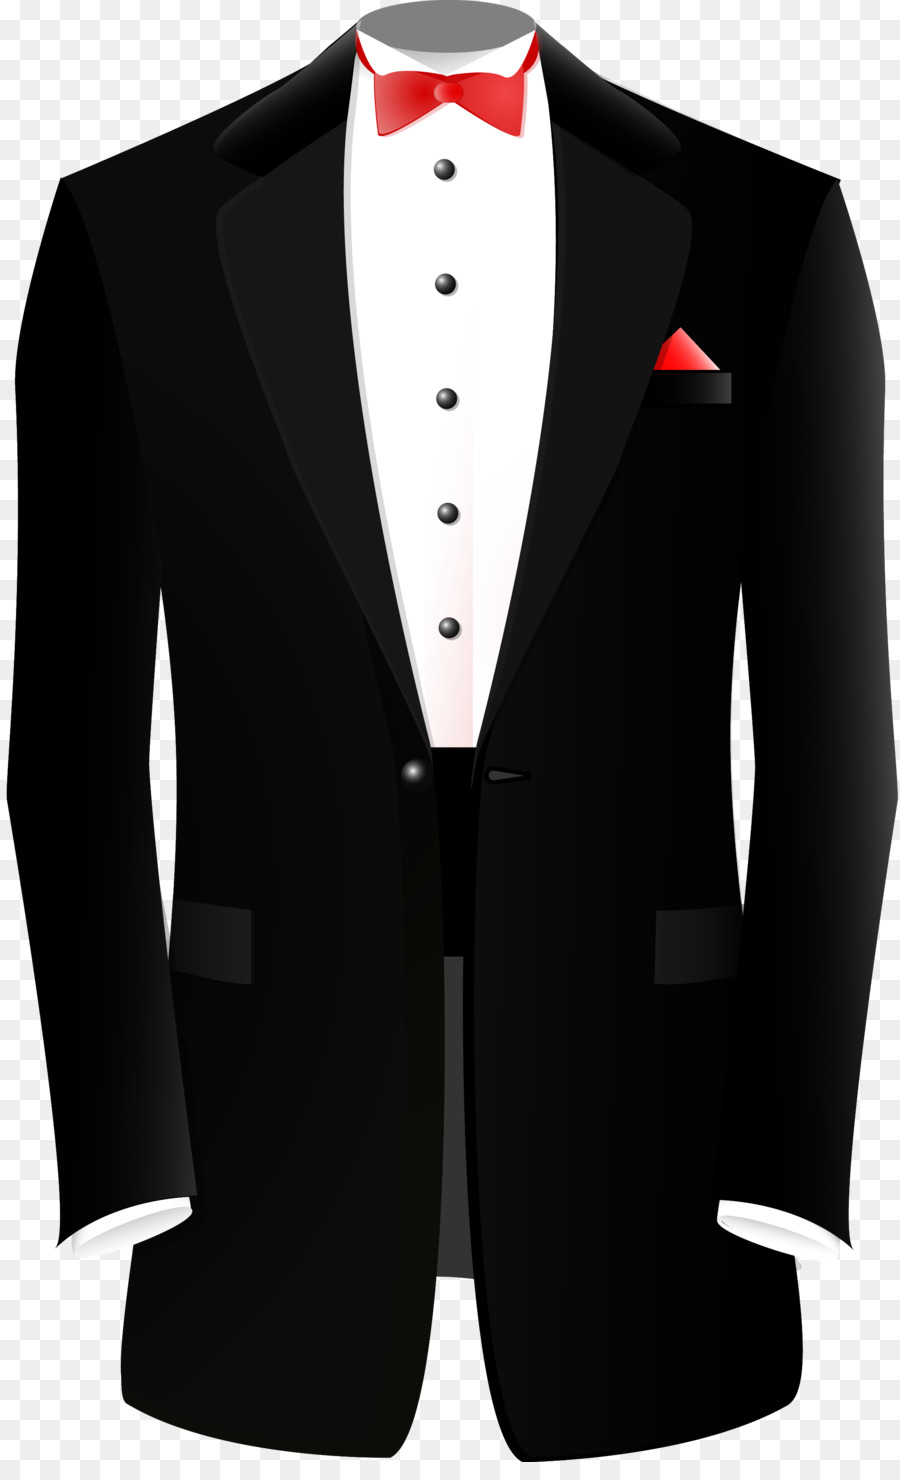 Download - Vector suit png download - 2133*3466 - Free Transparent Download png Download.